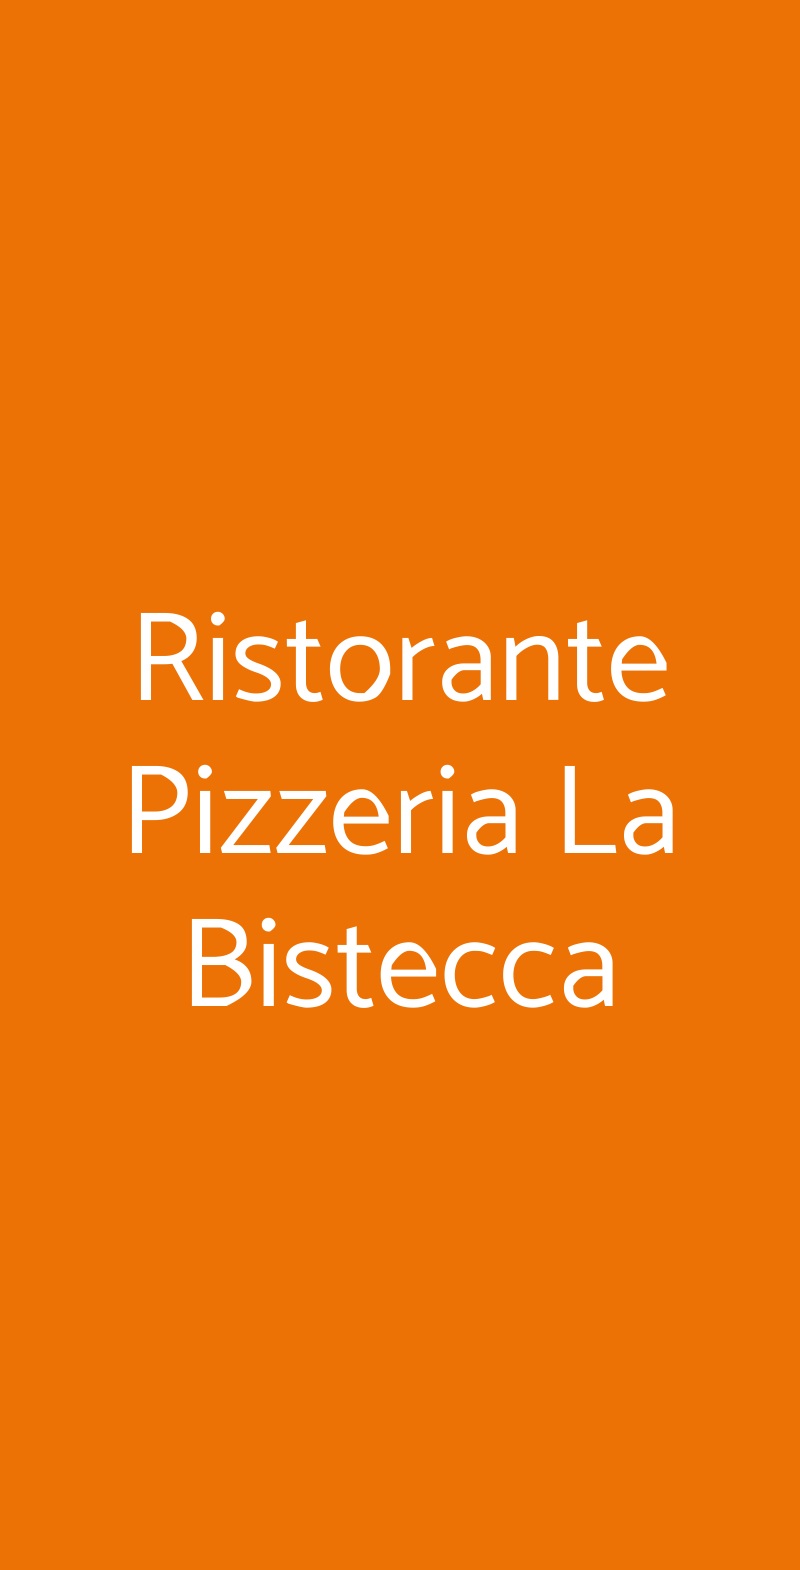 Ristorante Pizzeria La Bistecca Pisa menù 1 pagina